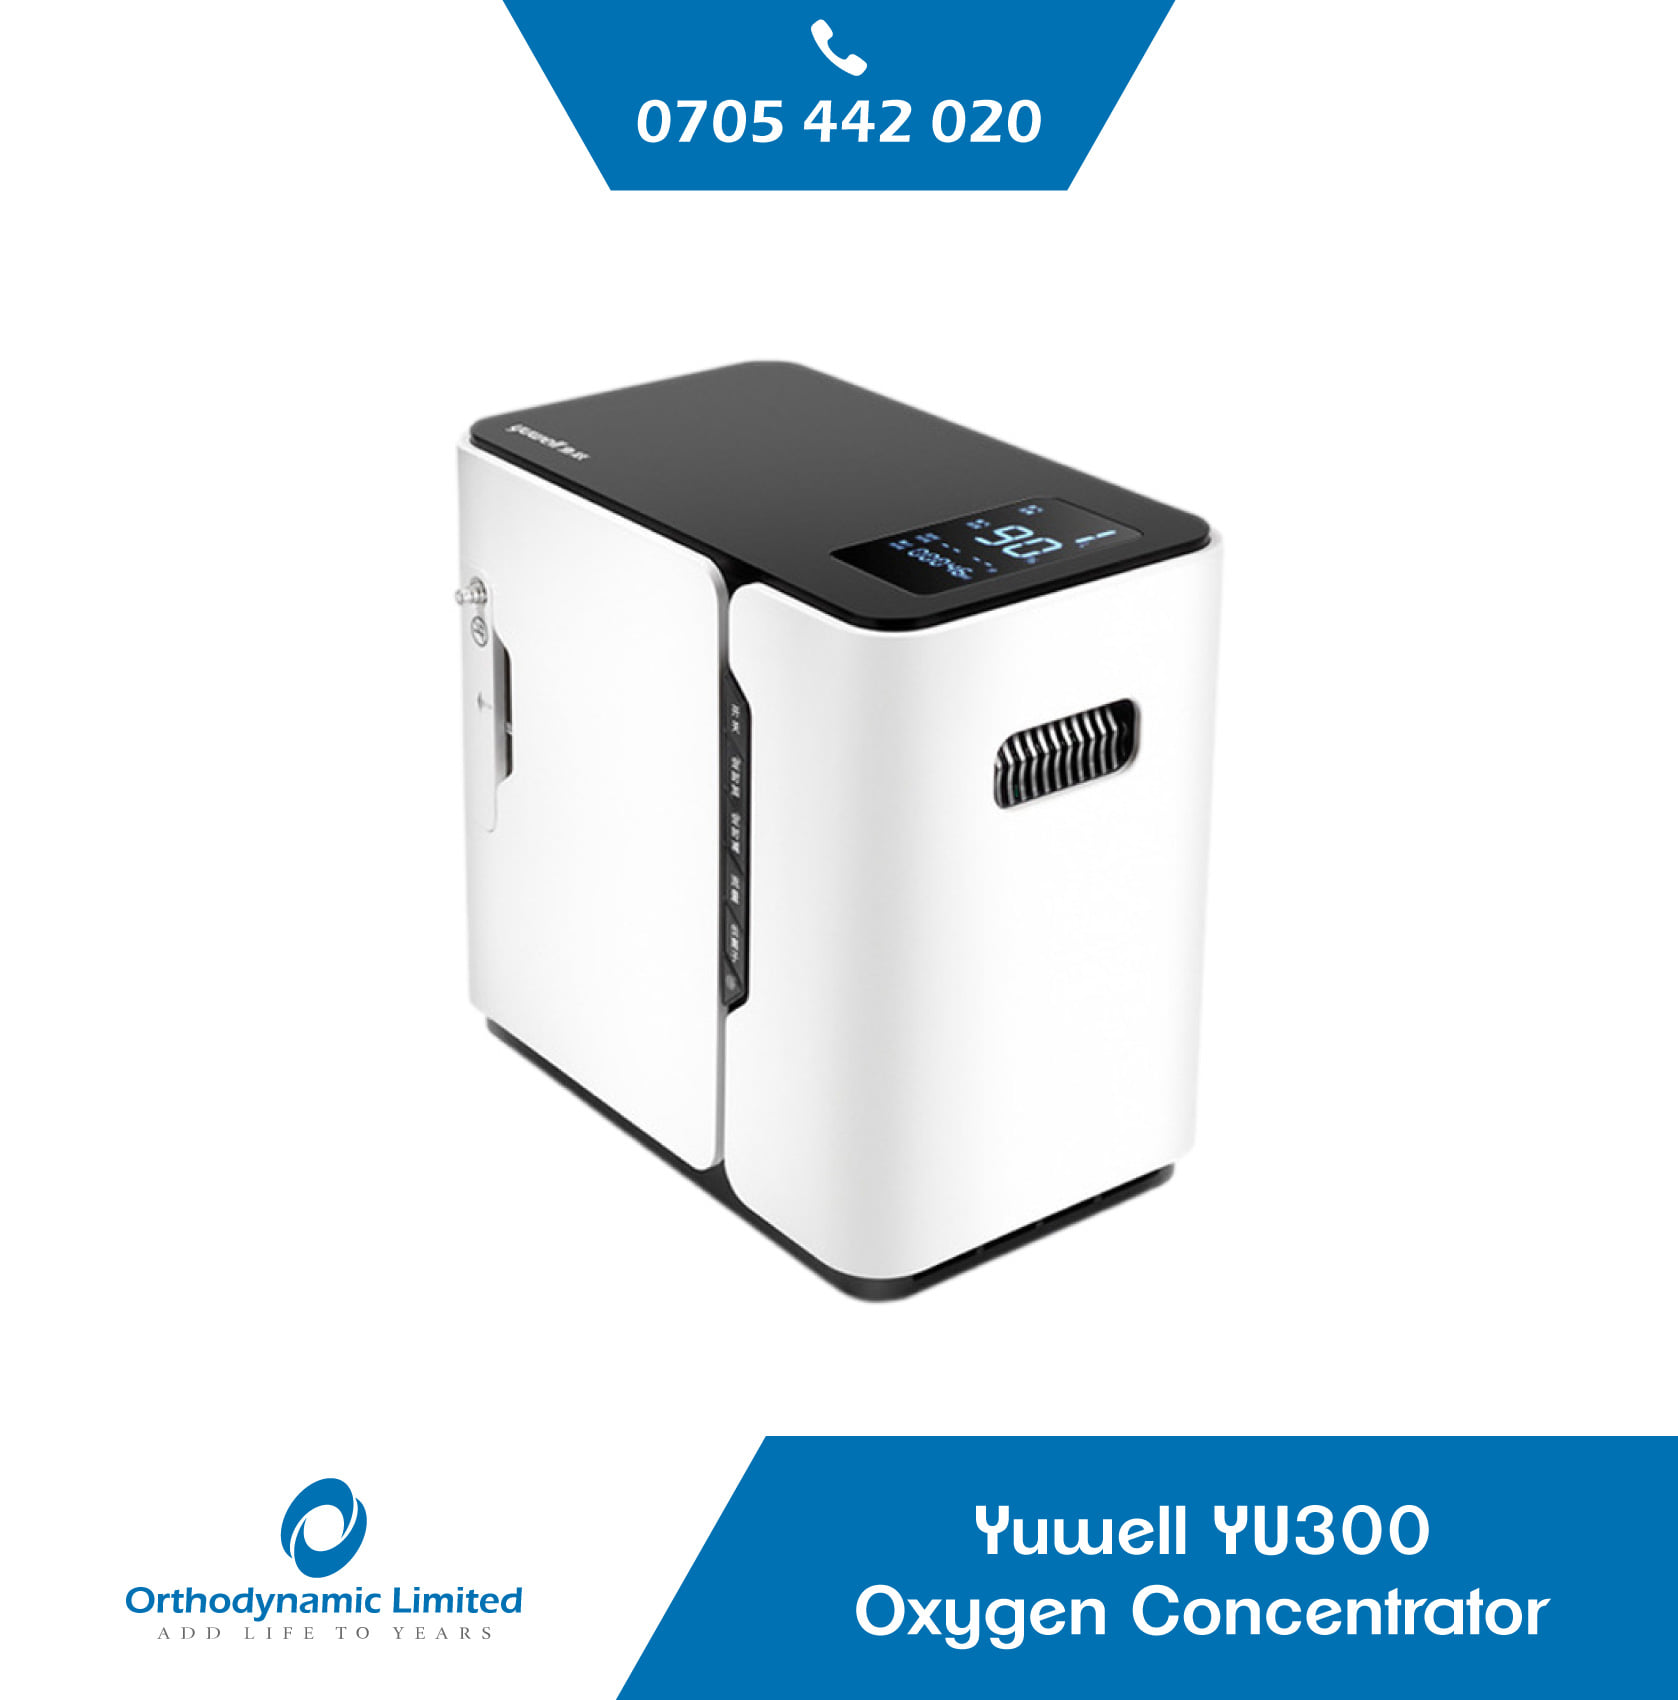 Yuwell Oxygen concentrator YU300